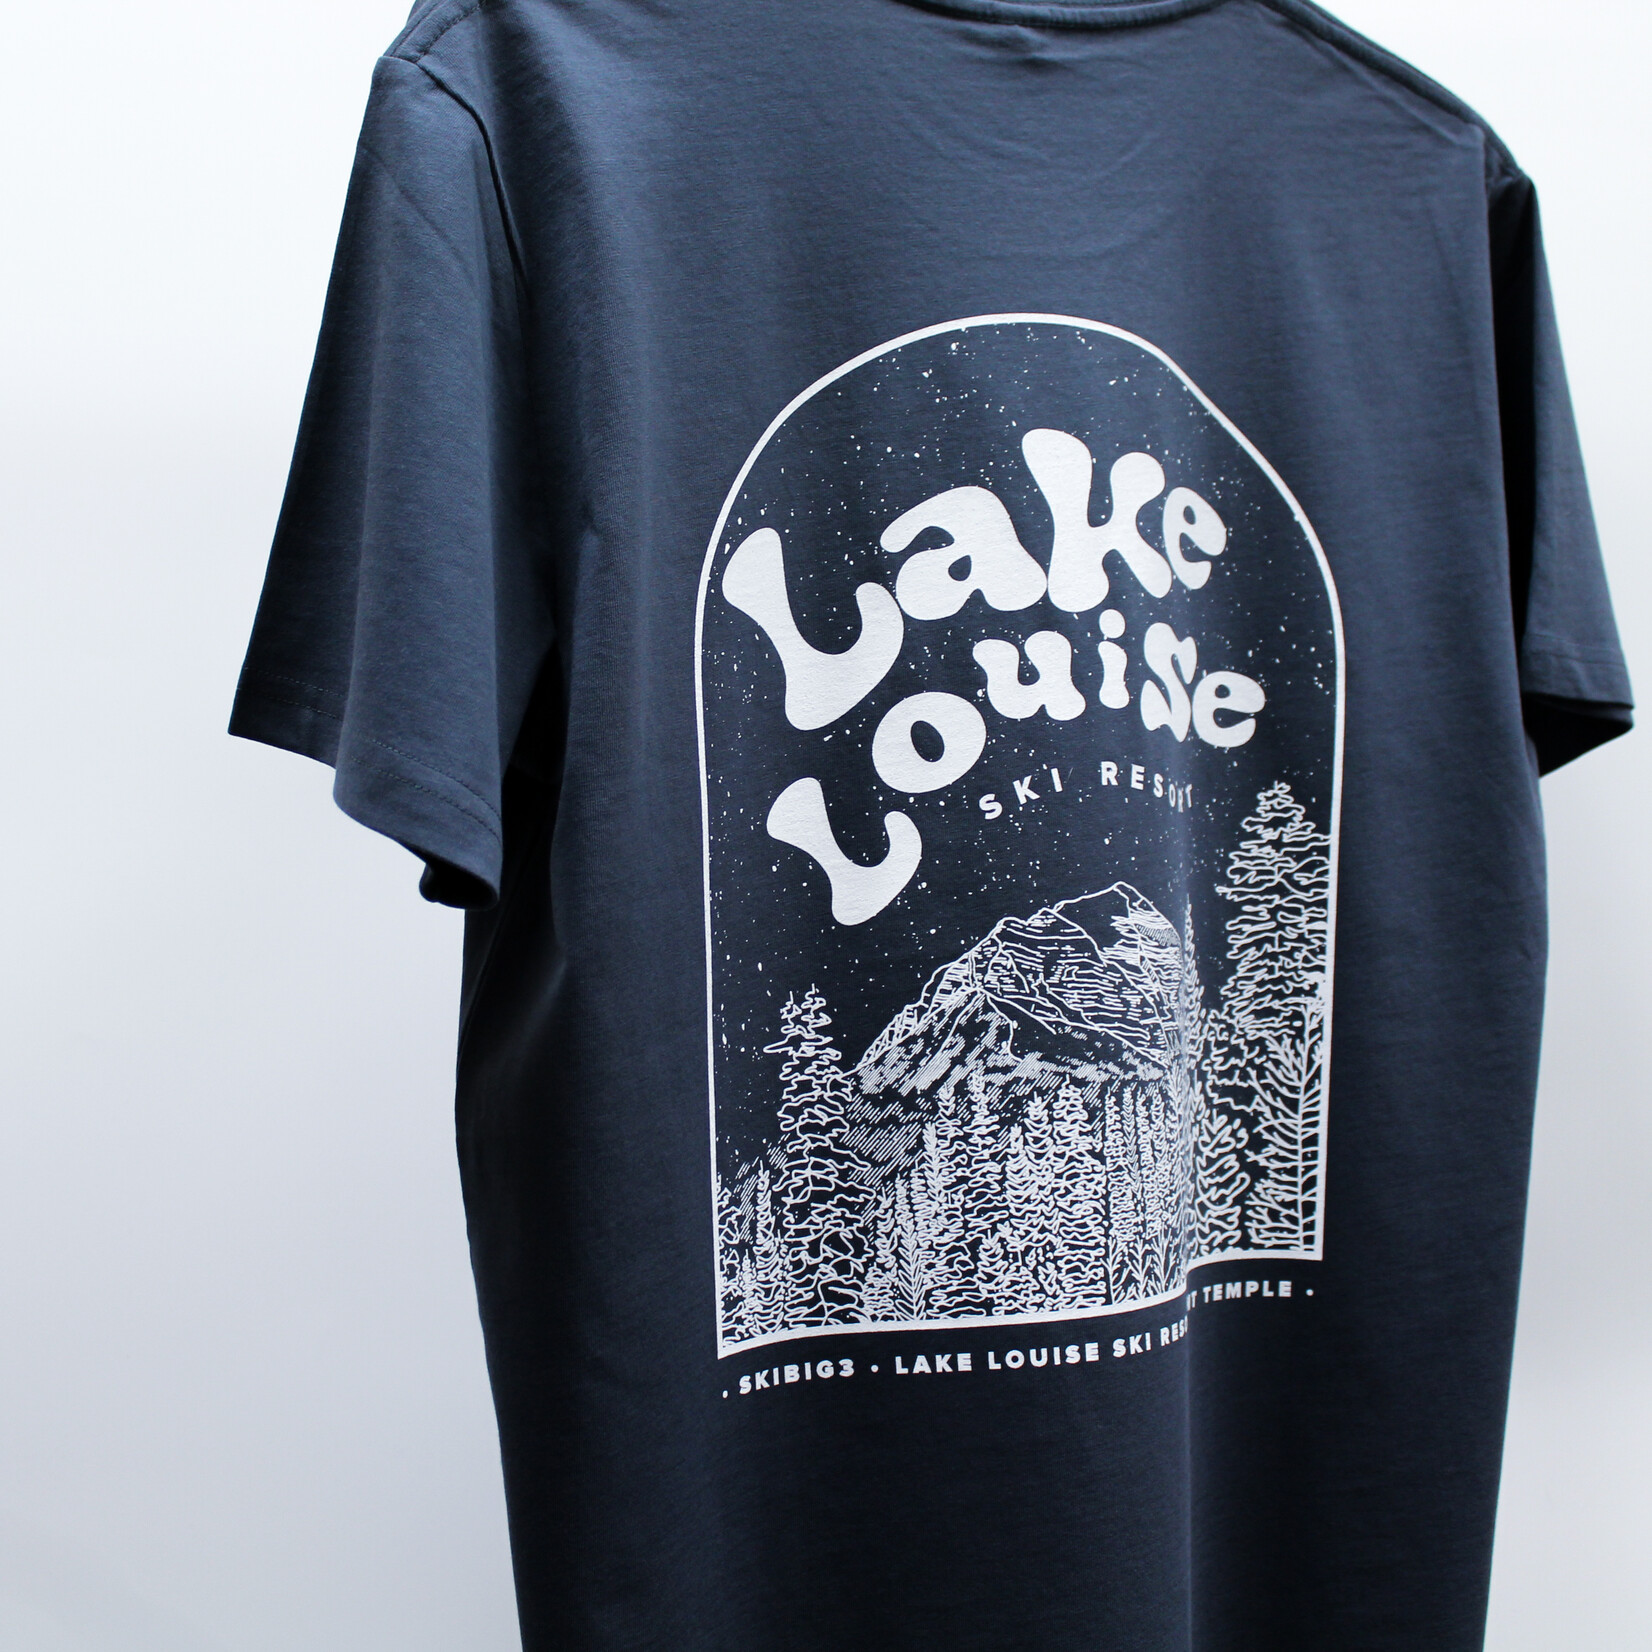 SkiBig3 SkiBig3 Lake Louise Ski Resort T-Shirt